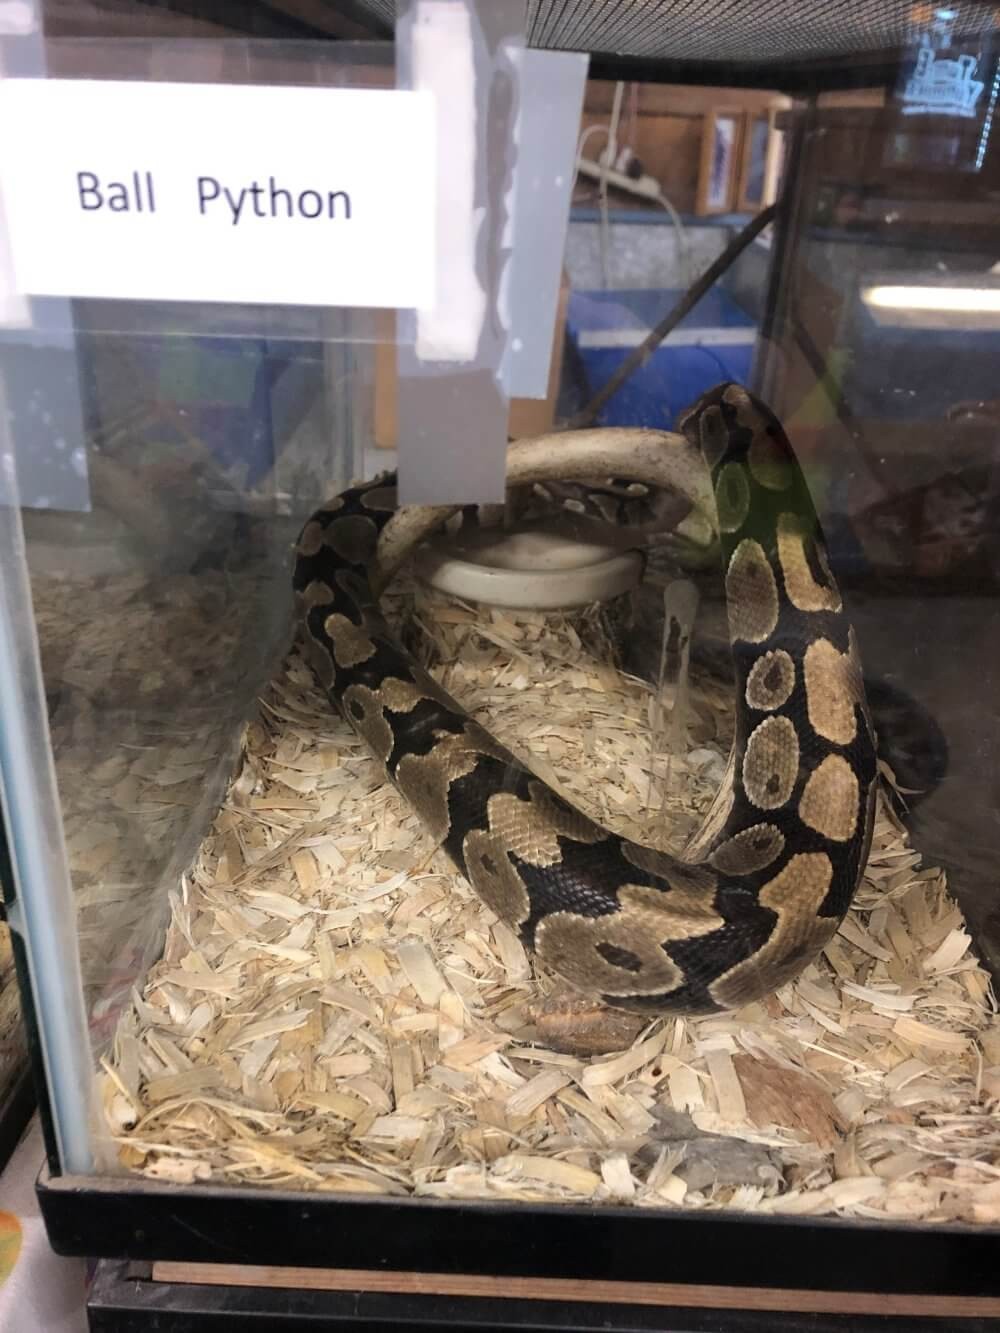 ball-python-tiny-enclosure_4831-rotated (1)